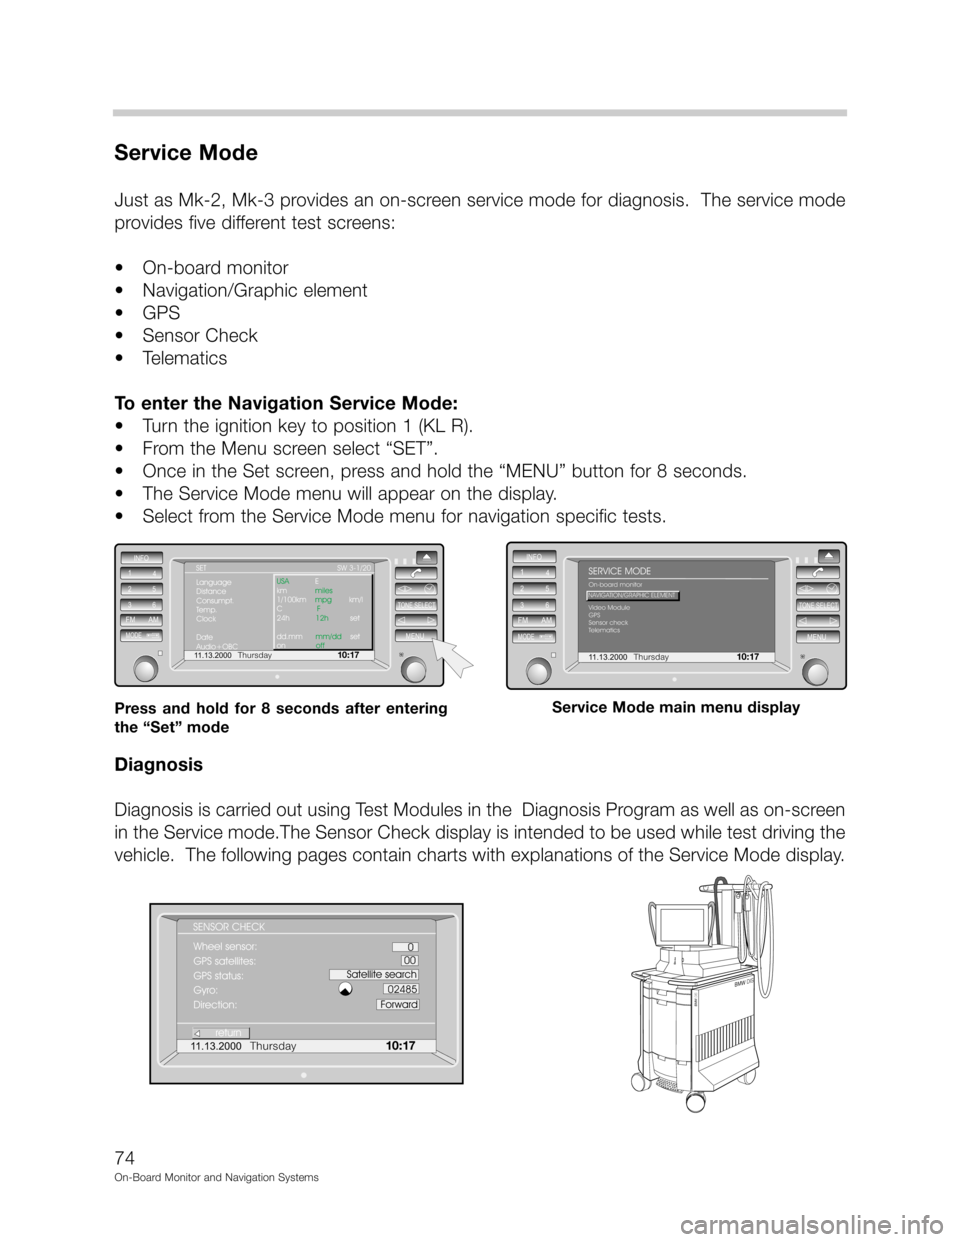 BMW 7 SERIES 1998 E38 On Board Monitor System Manual PDF ,:



"&
(	
, 	
R969.
&


&	
#&	

&&


 
	

